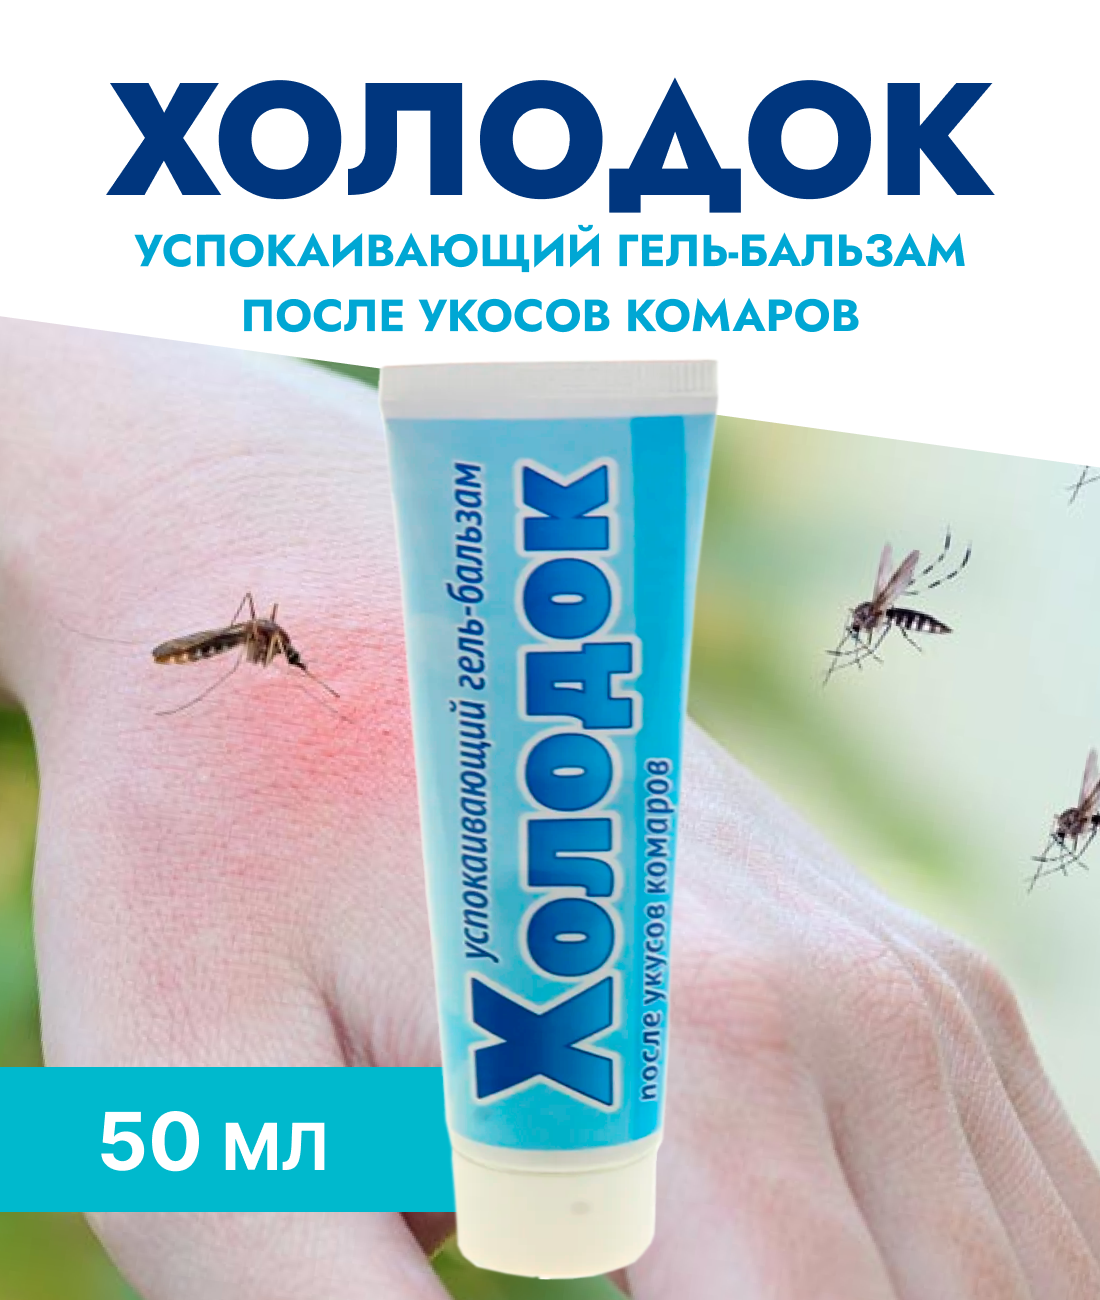 Средства против комаров ХолодОк - фото №14